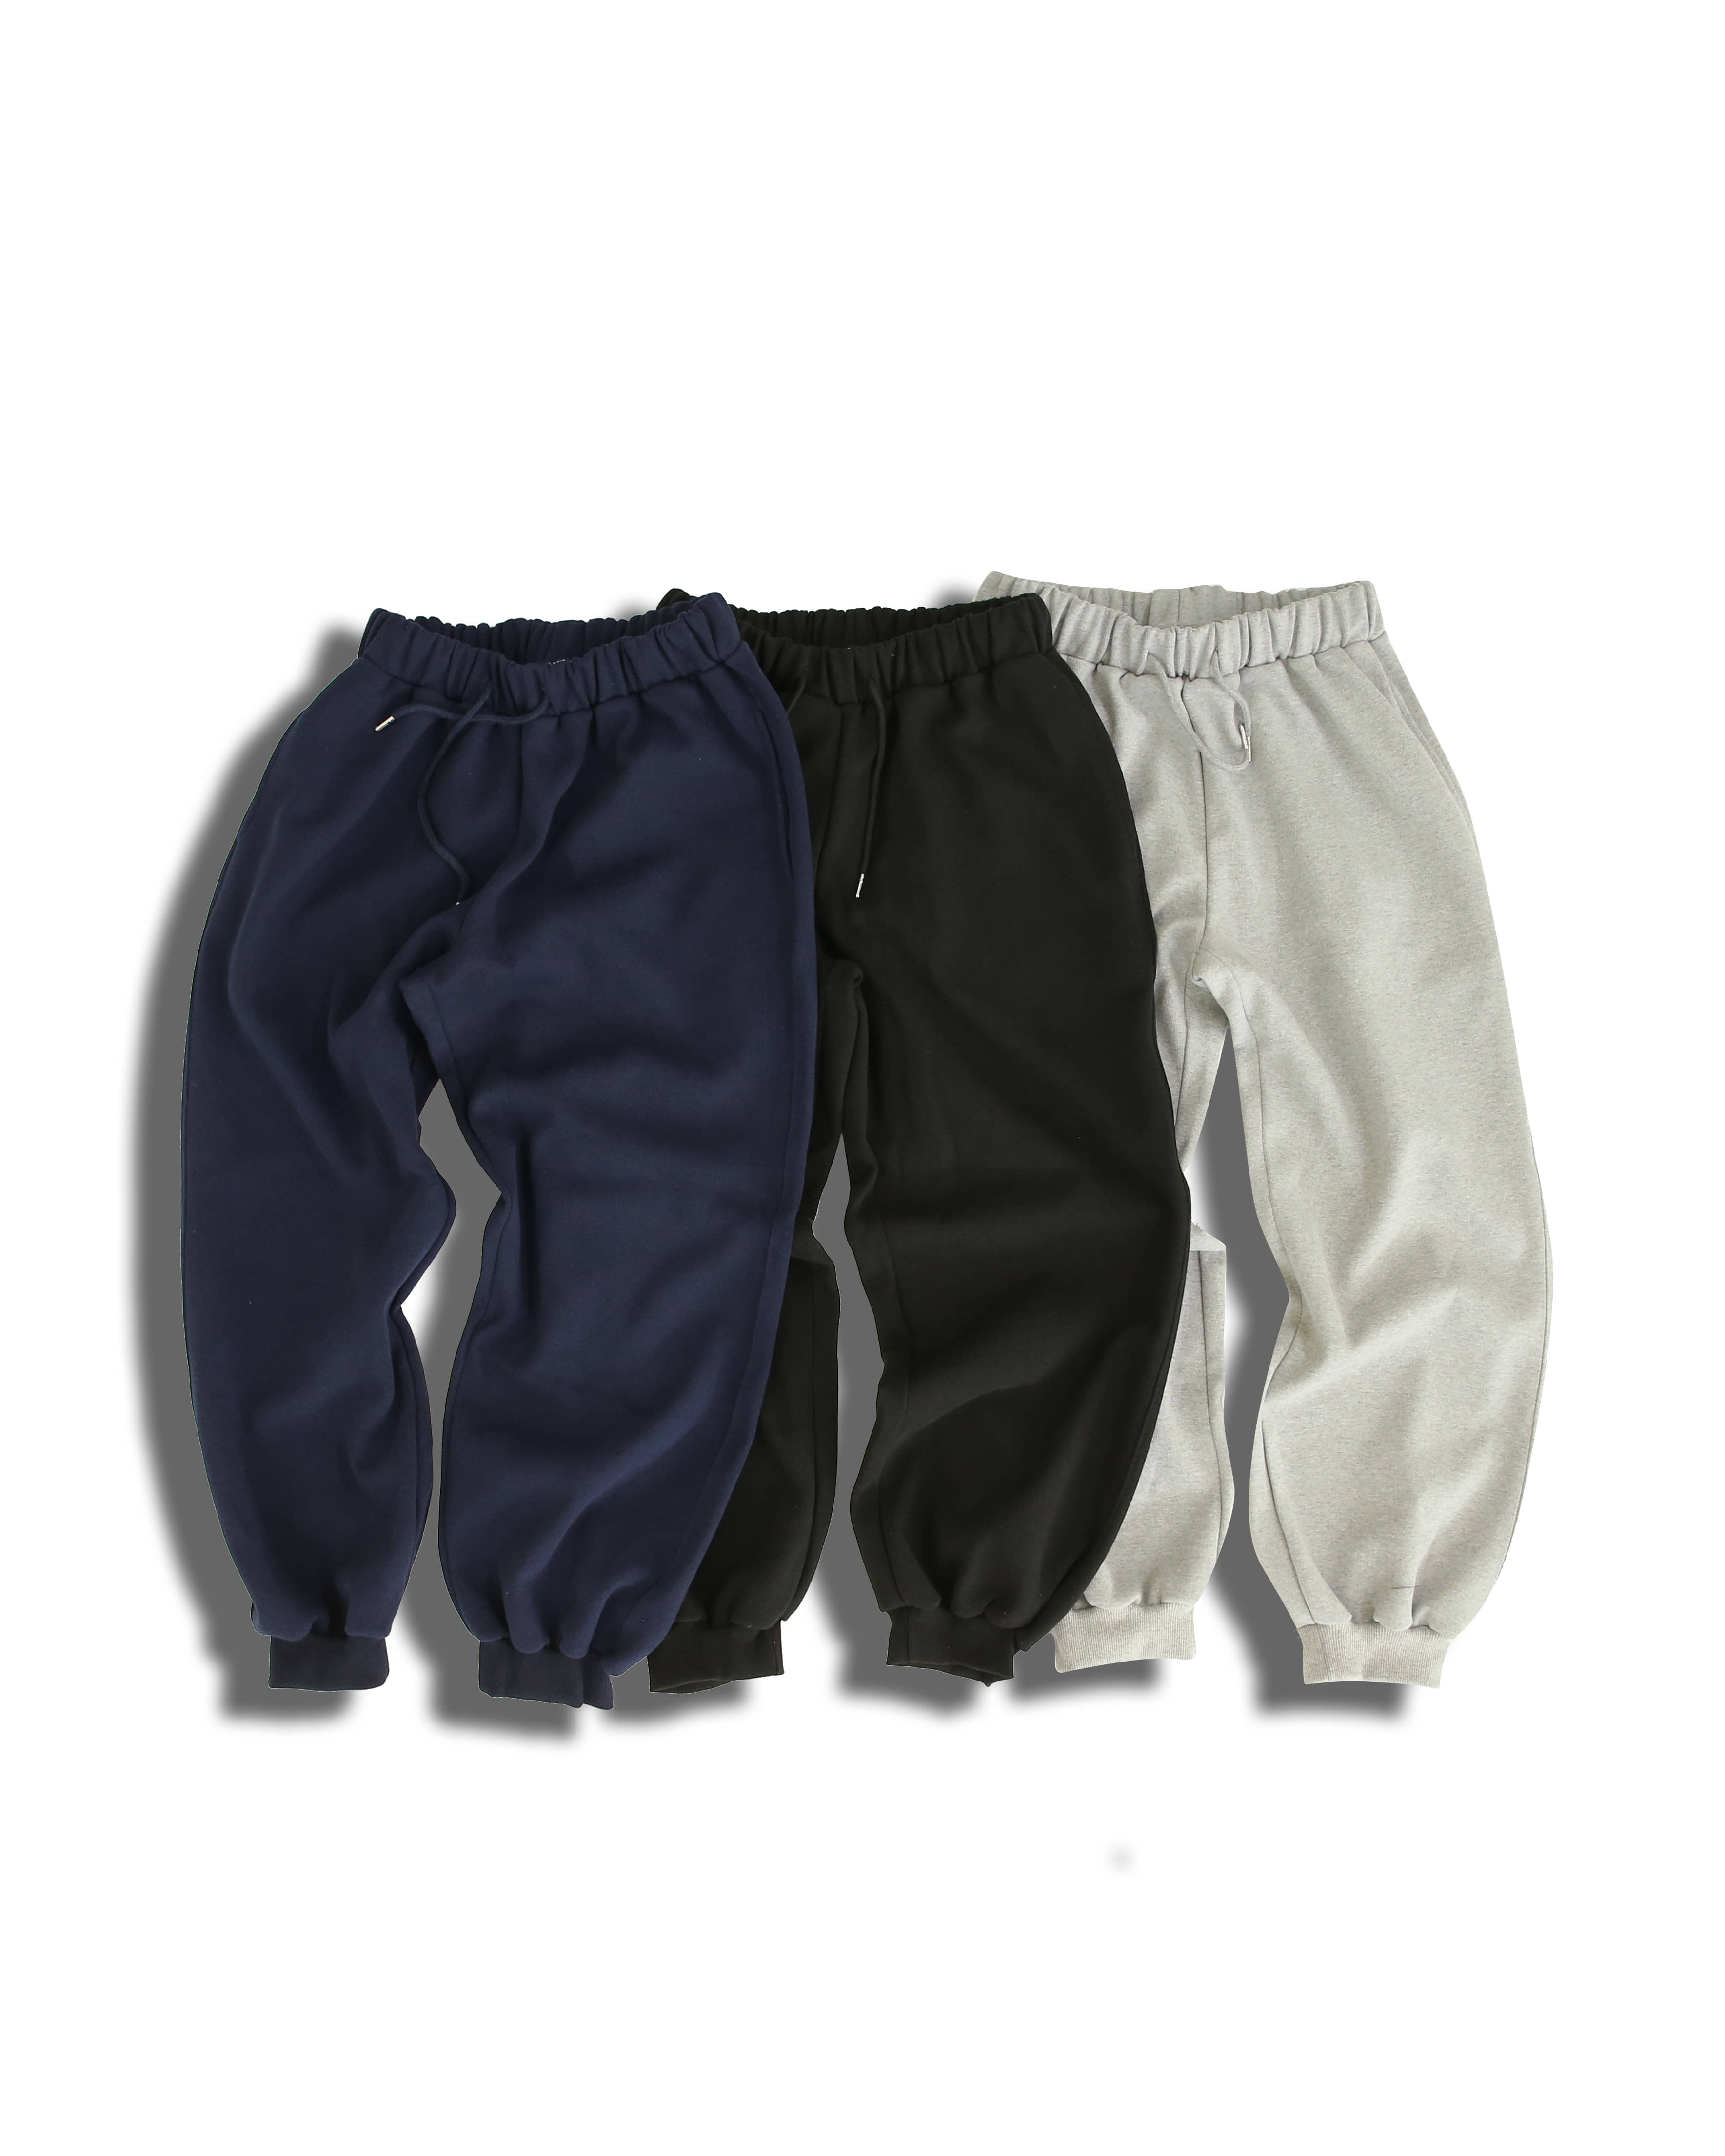 Wide Jogger Training Pants (Black/Navy/Gray)